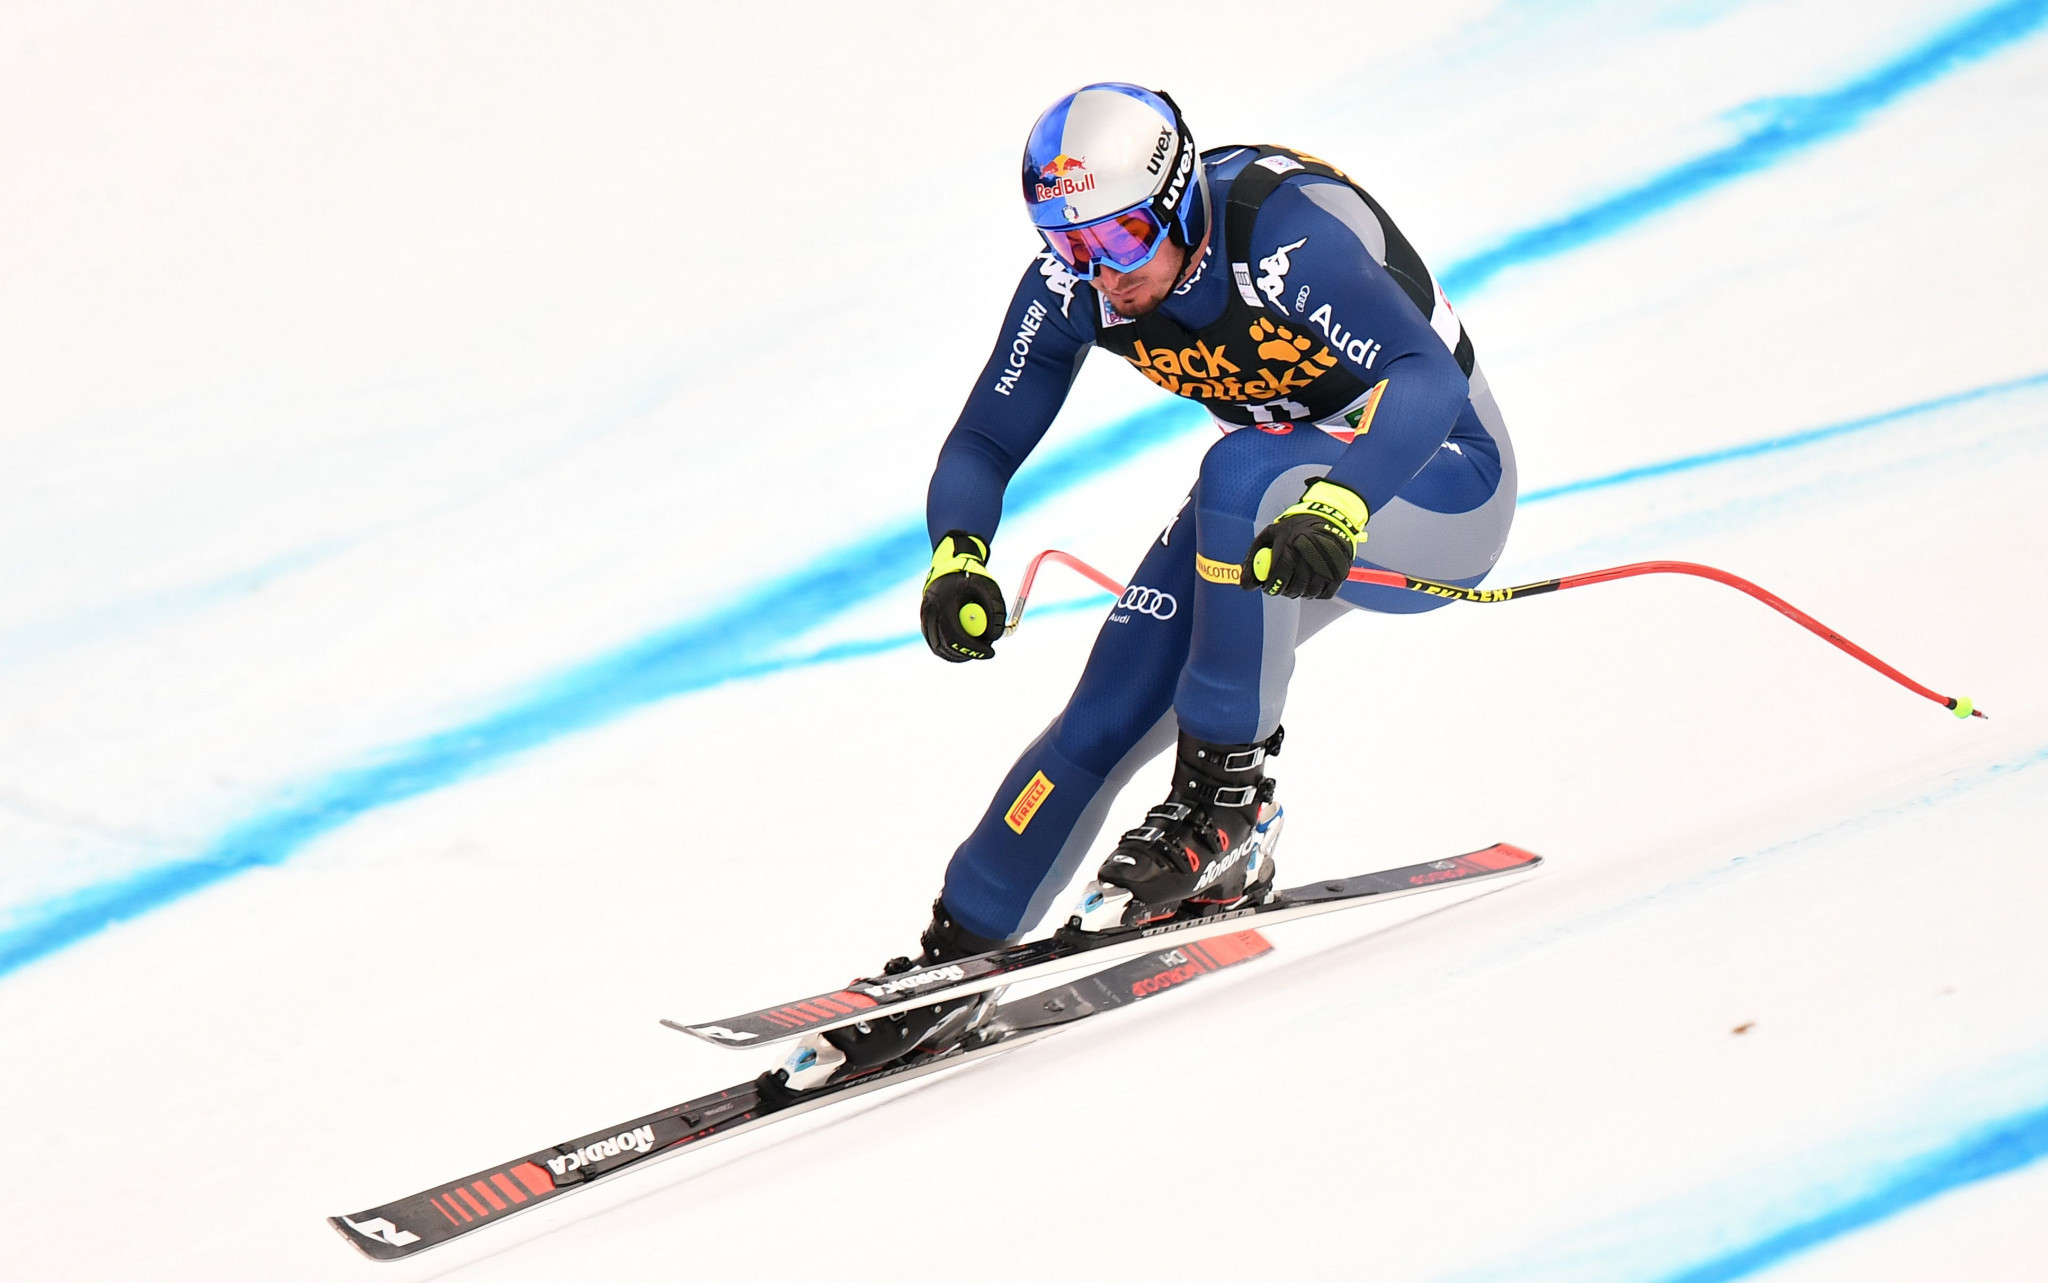 FIS Alpine Skiing Committee optimistic for 2020-2021 season but taskforce to make contingency plan